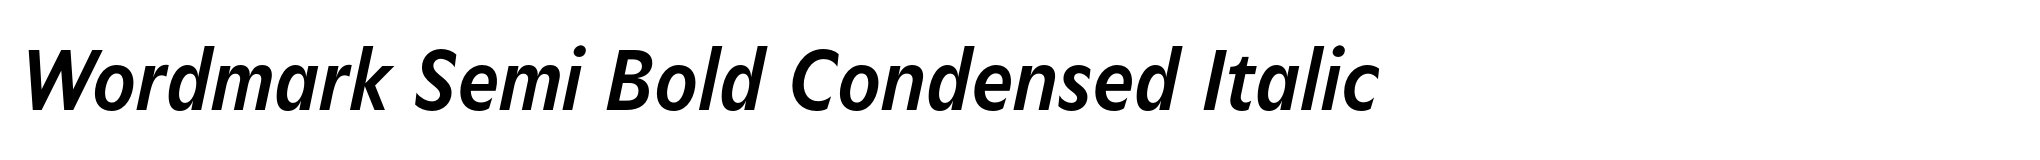 Wordmark Semi Bold Condensed Italic image